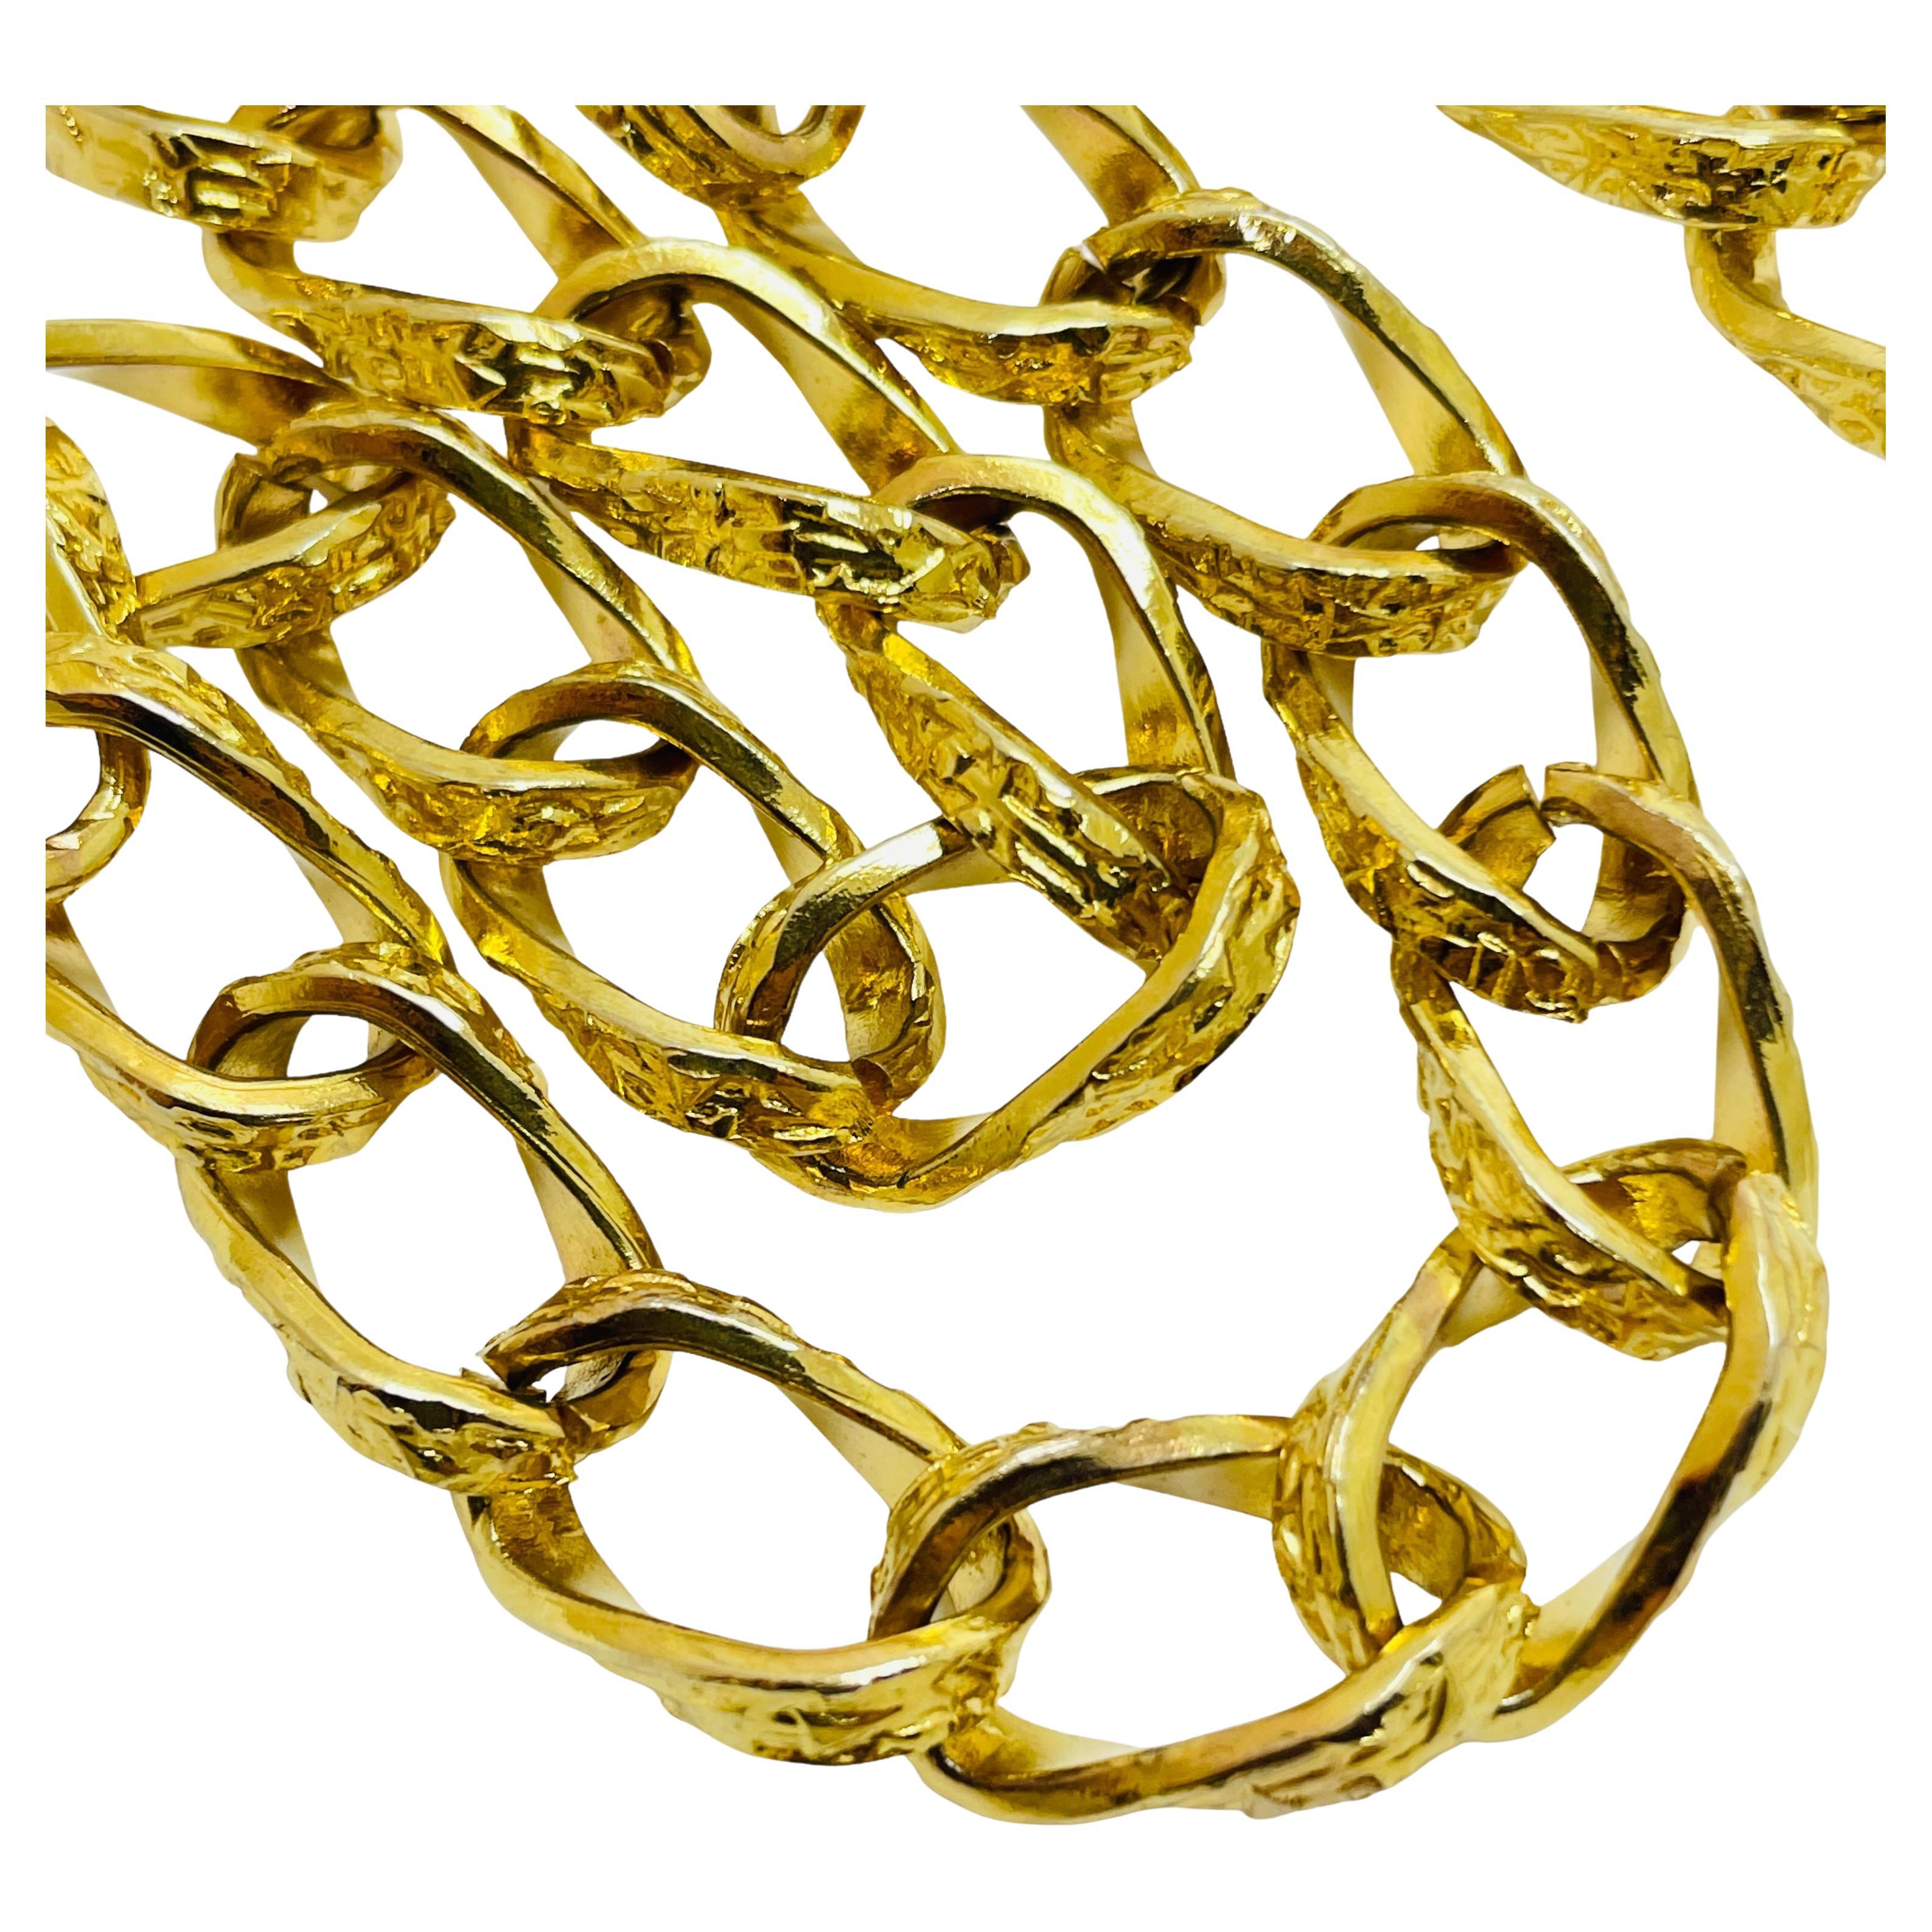 Vintage gold tone massive textured chain necklace